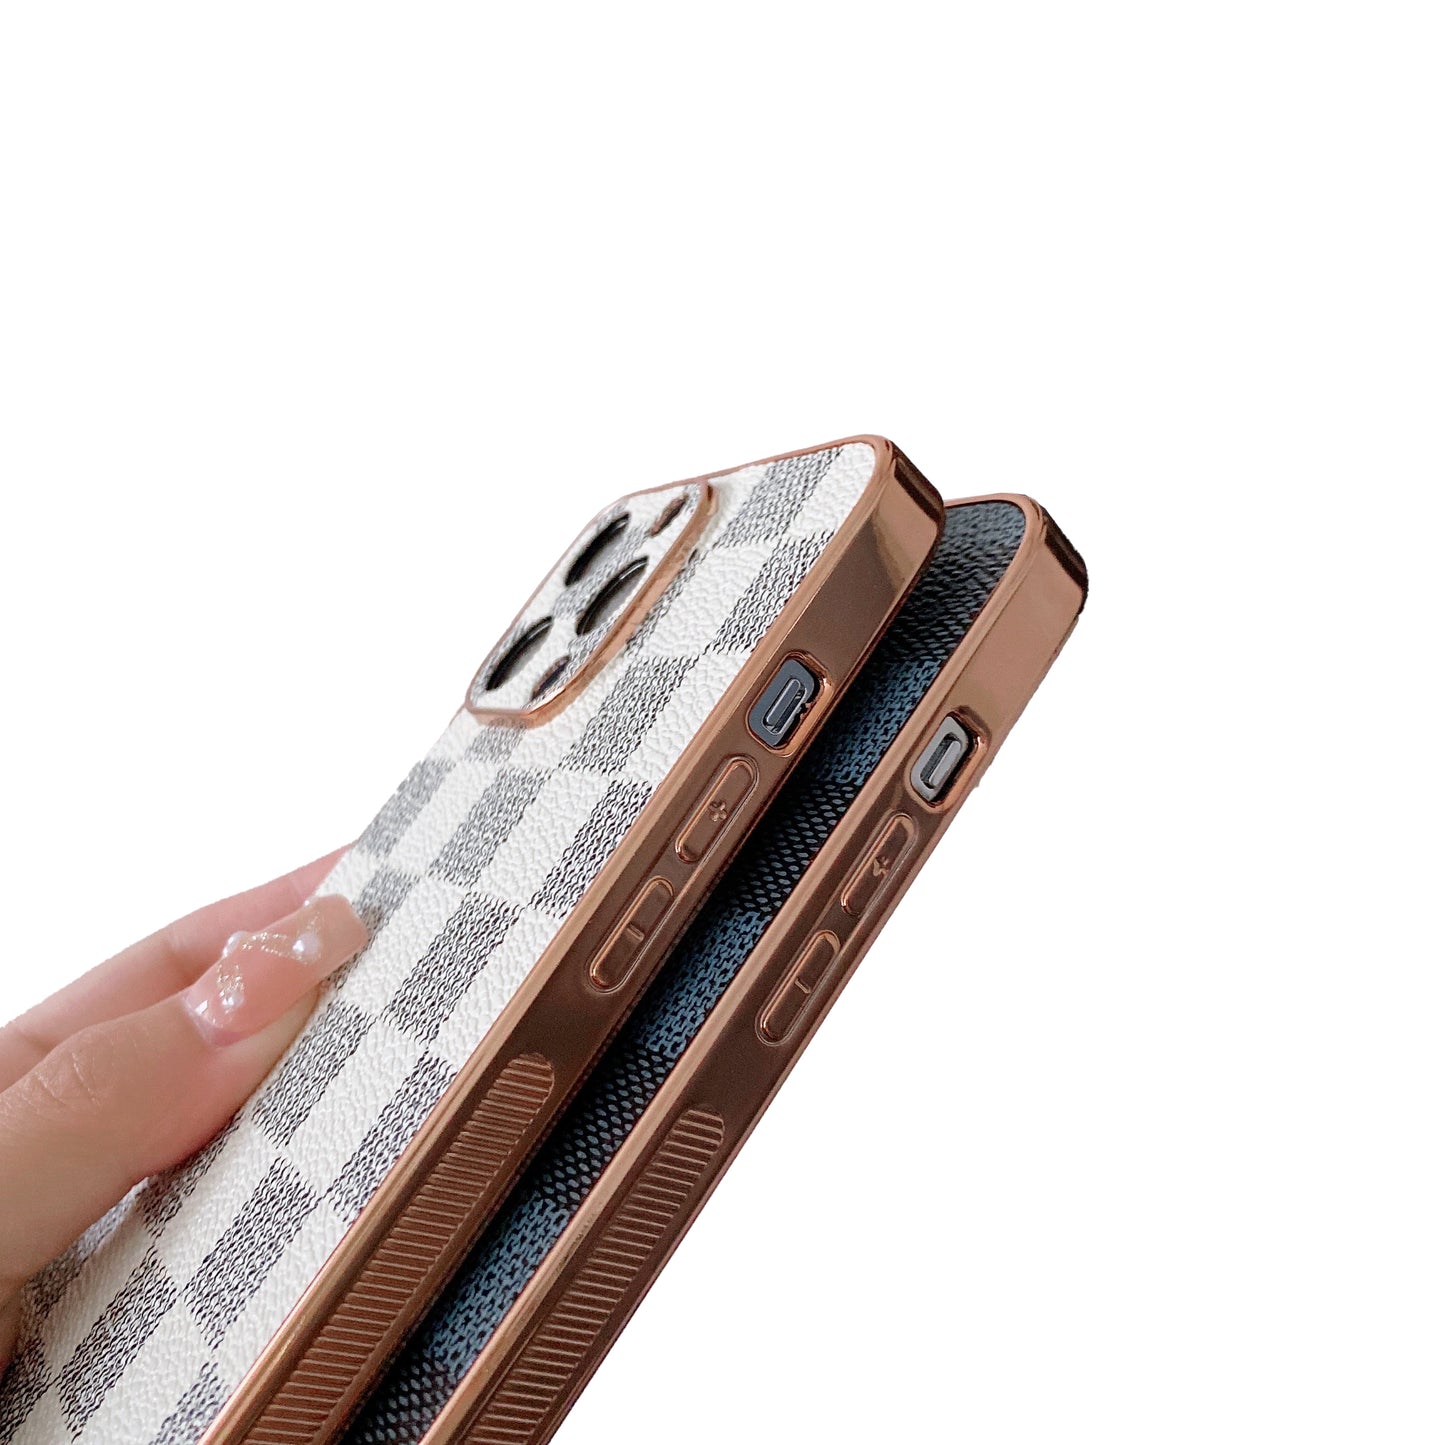 Luxury iPhone 13 Pro Max Case : Blue Checks